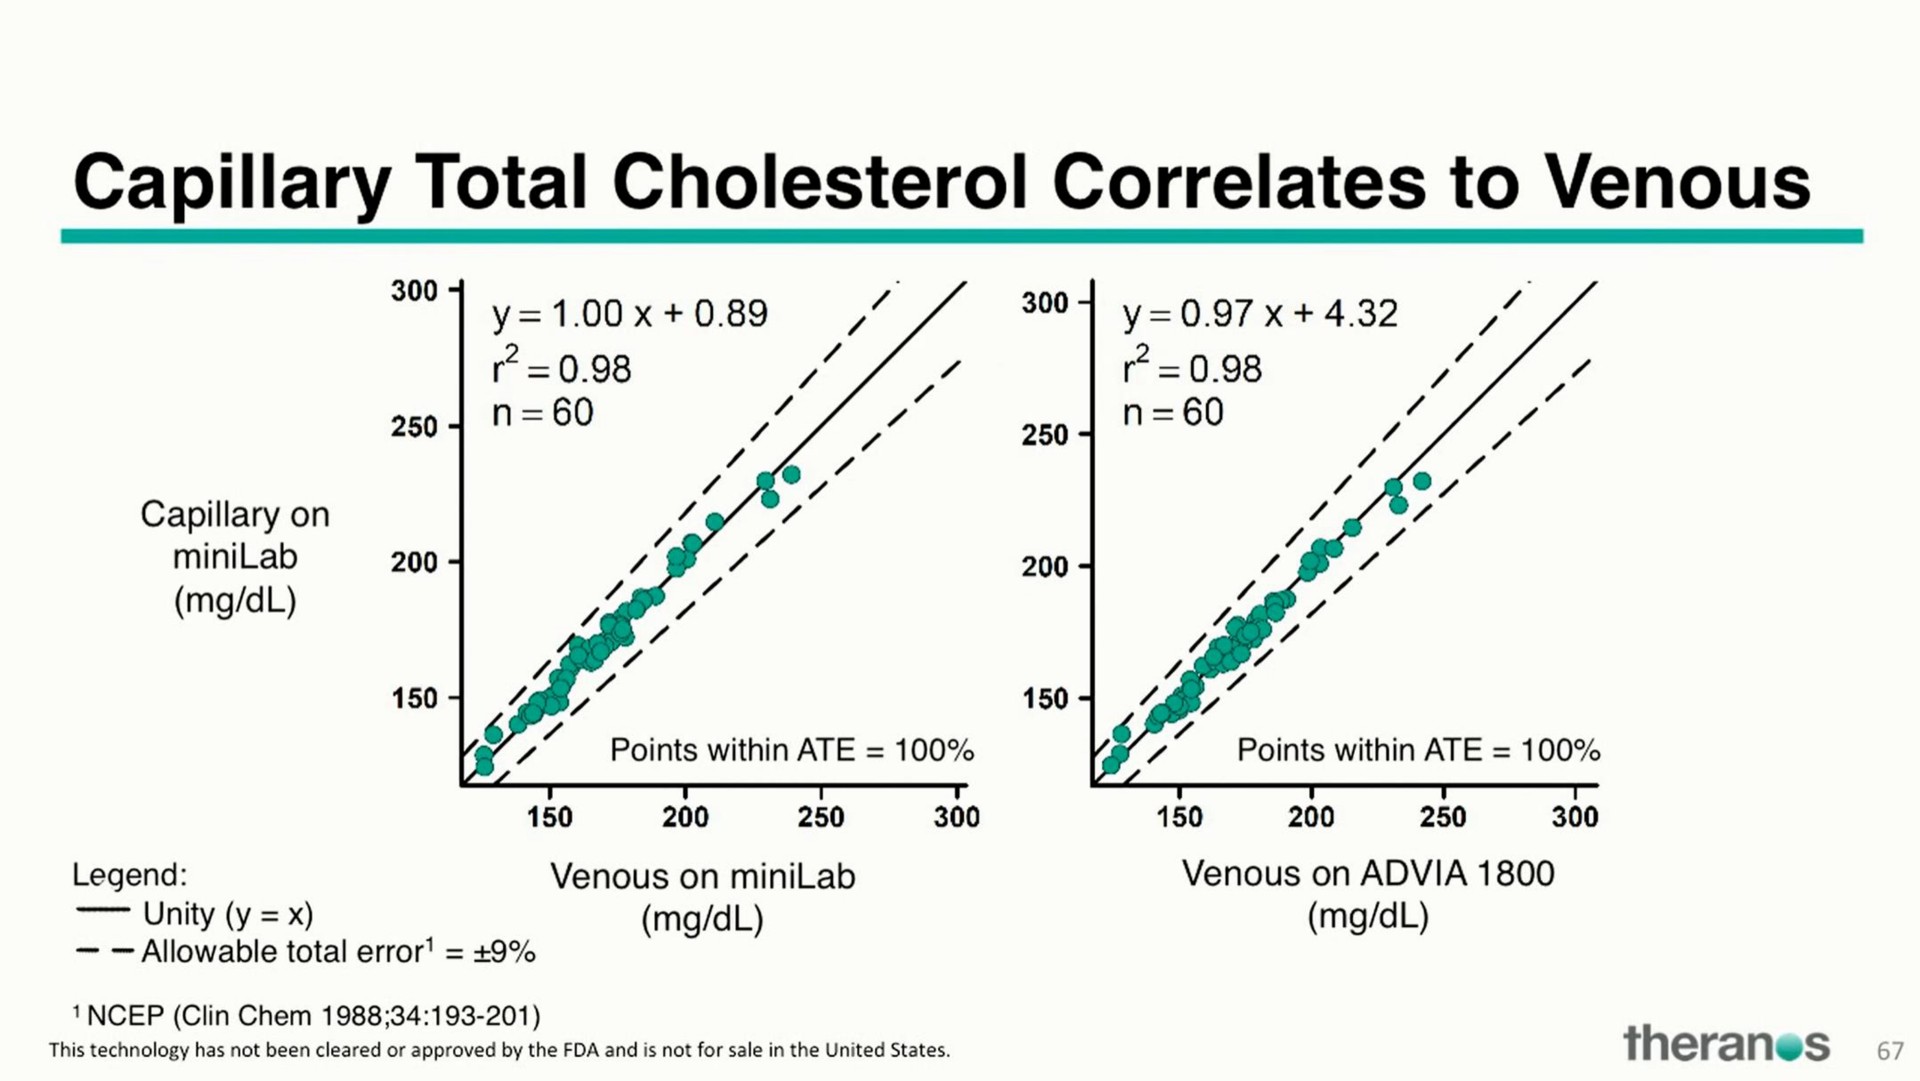 capillary total cholesterol correlates to venous | Theranos